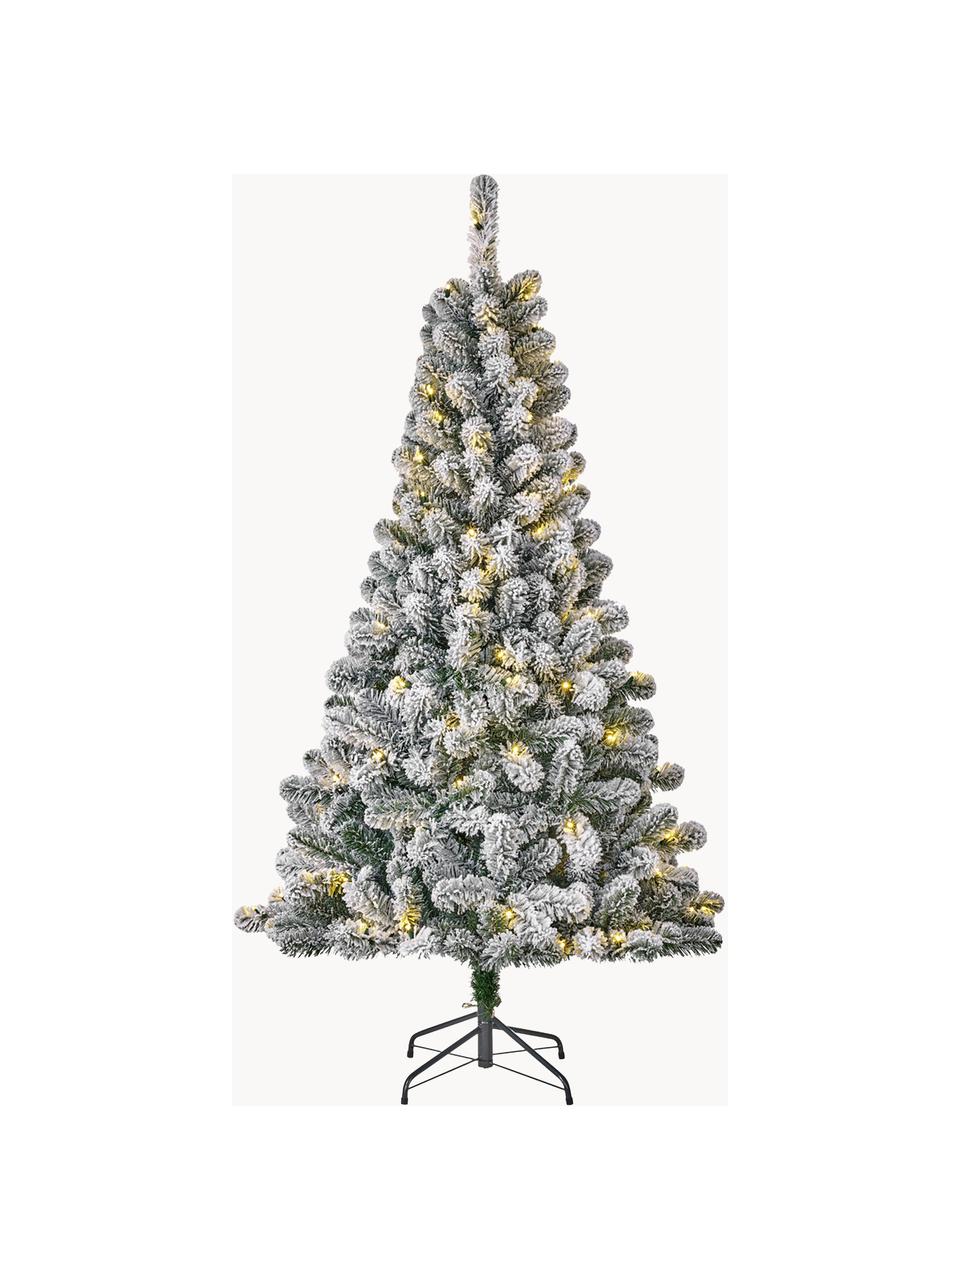 Decoratieve LED kerstboom Millington, H 155 cm, Groen, besneeuwd, Ø 86 x H 155 cm